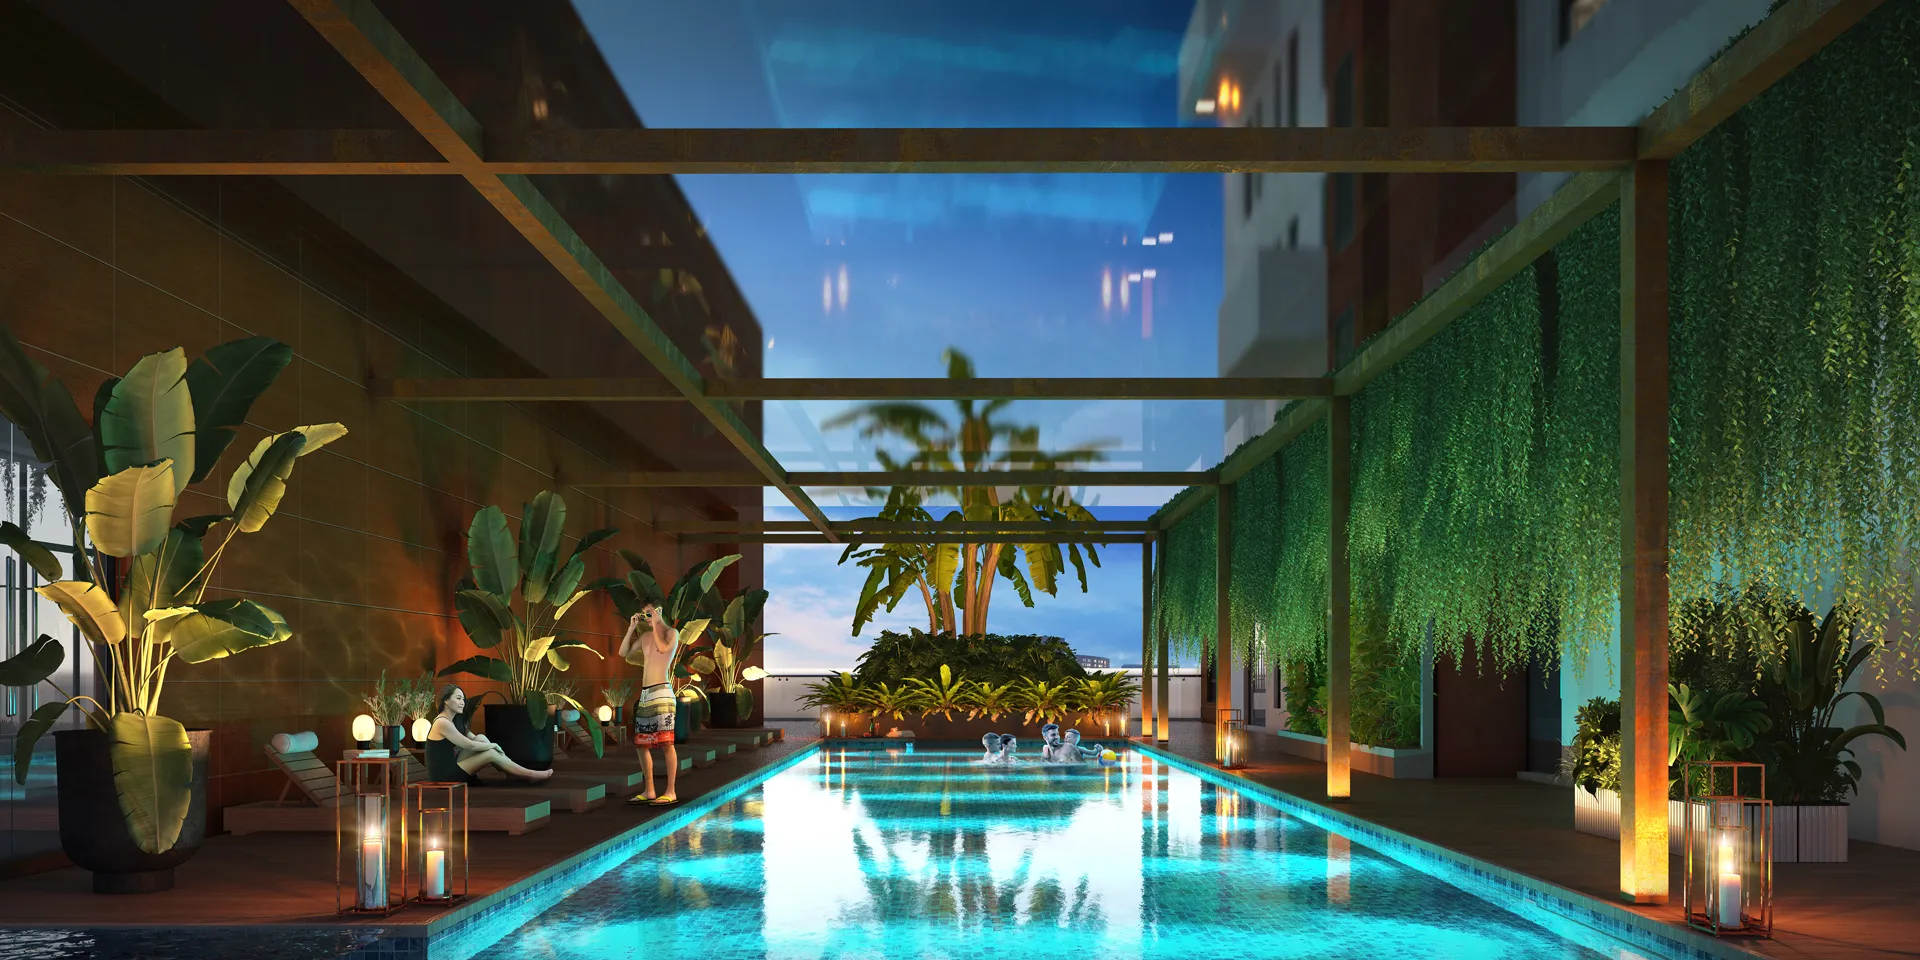 Niavara : luxury flats in kolkata with swimming pool